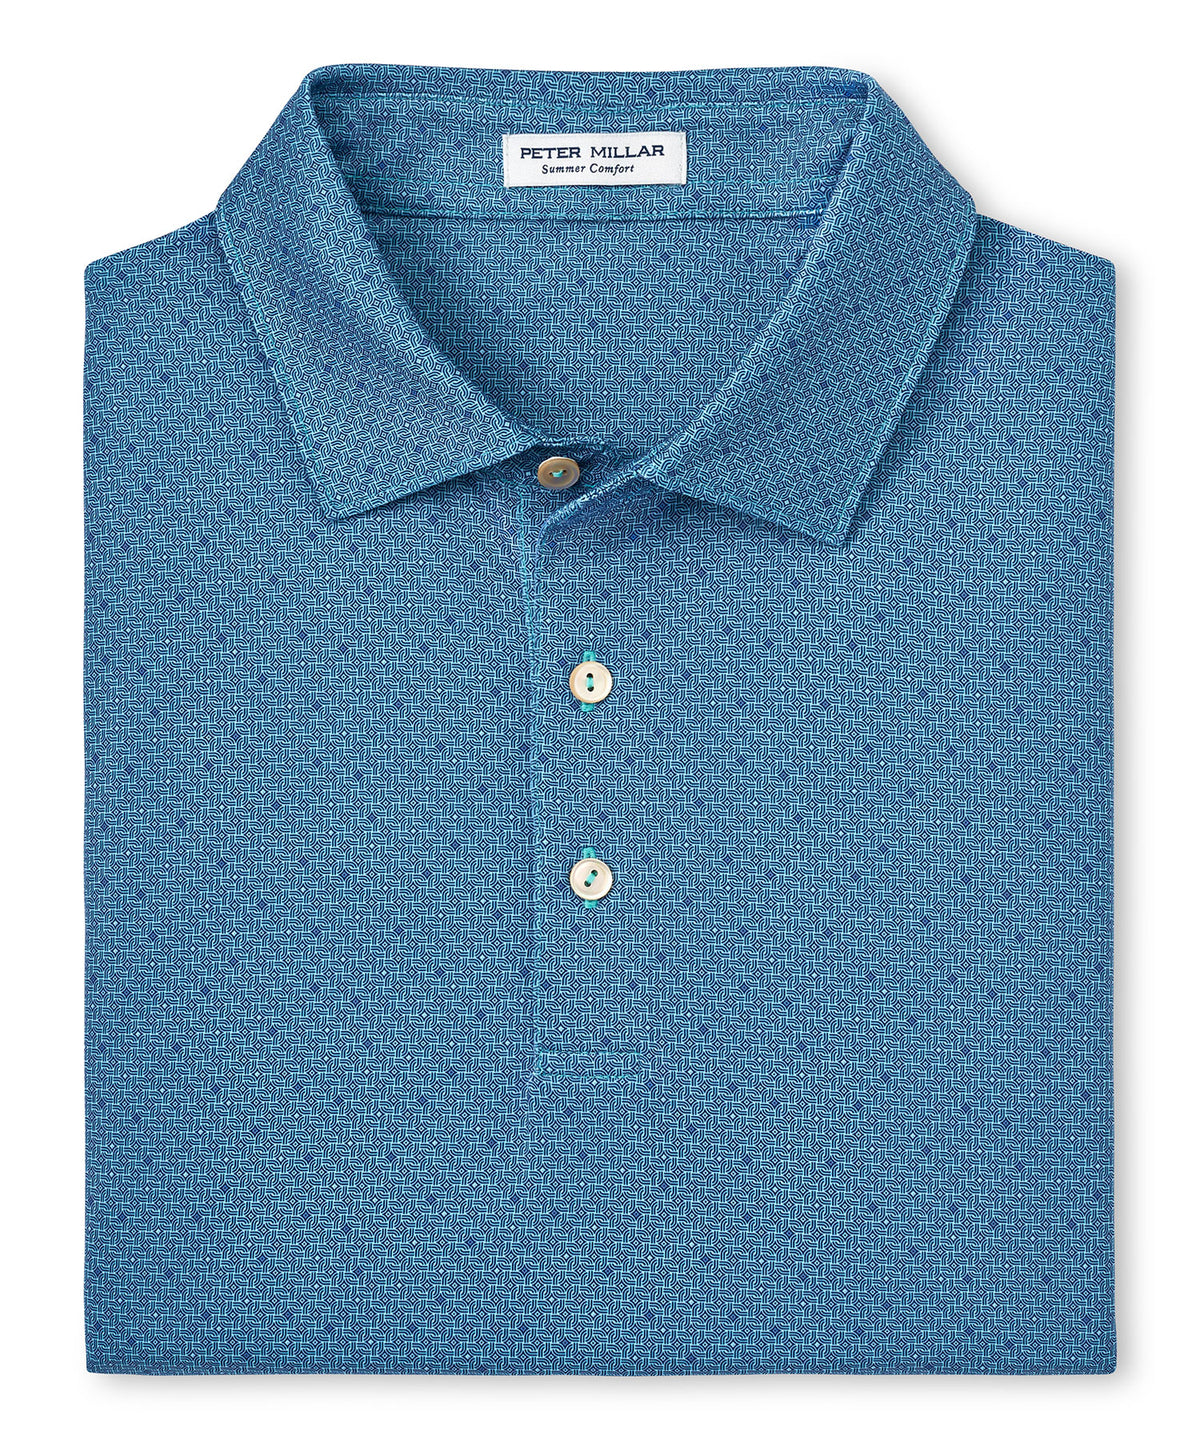 Peter Millar Short Sleeve Soriano Print Polo Knit Shirt, Big & Tall